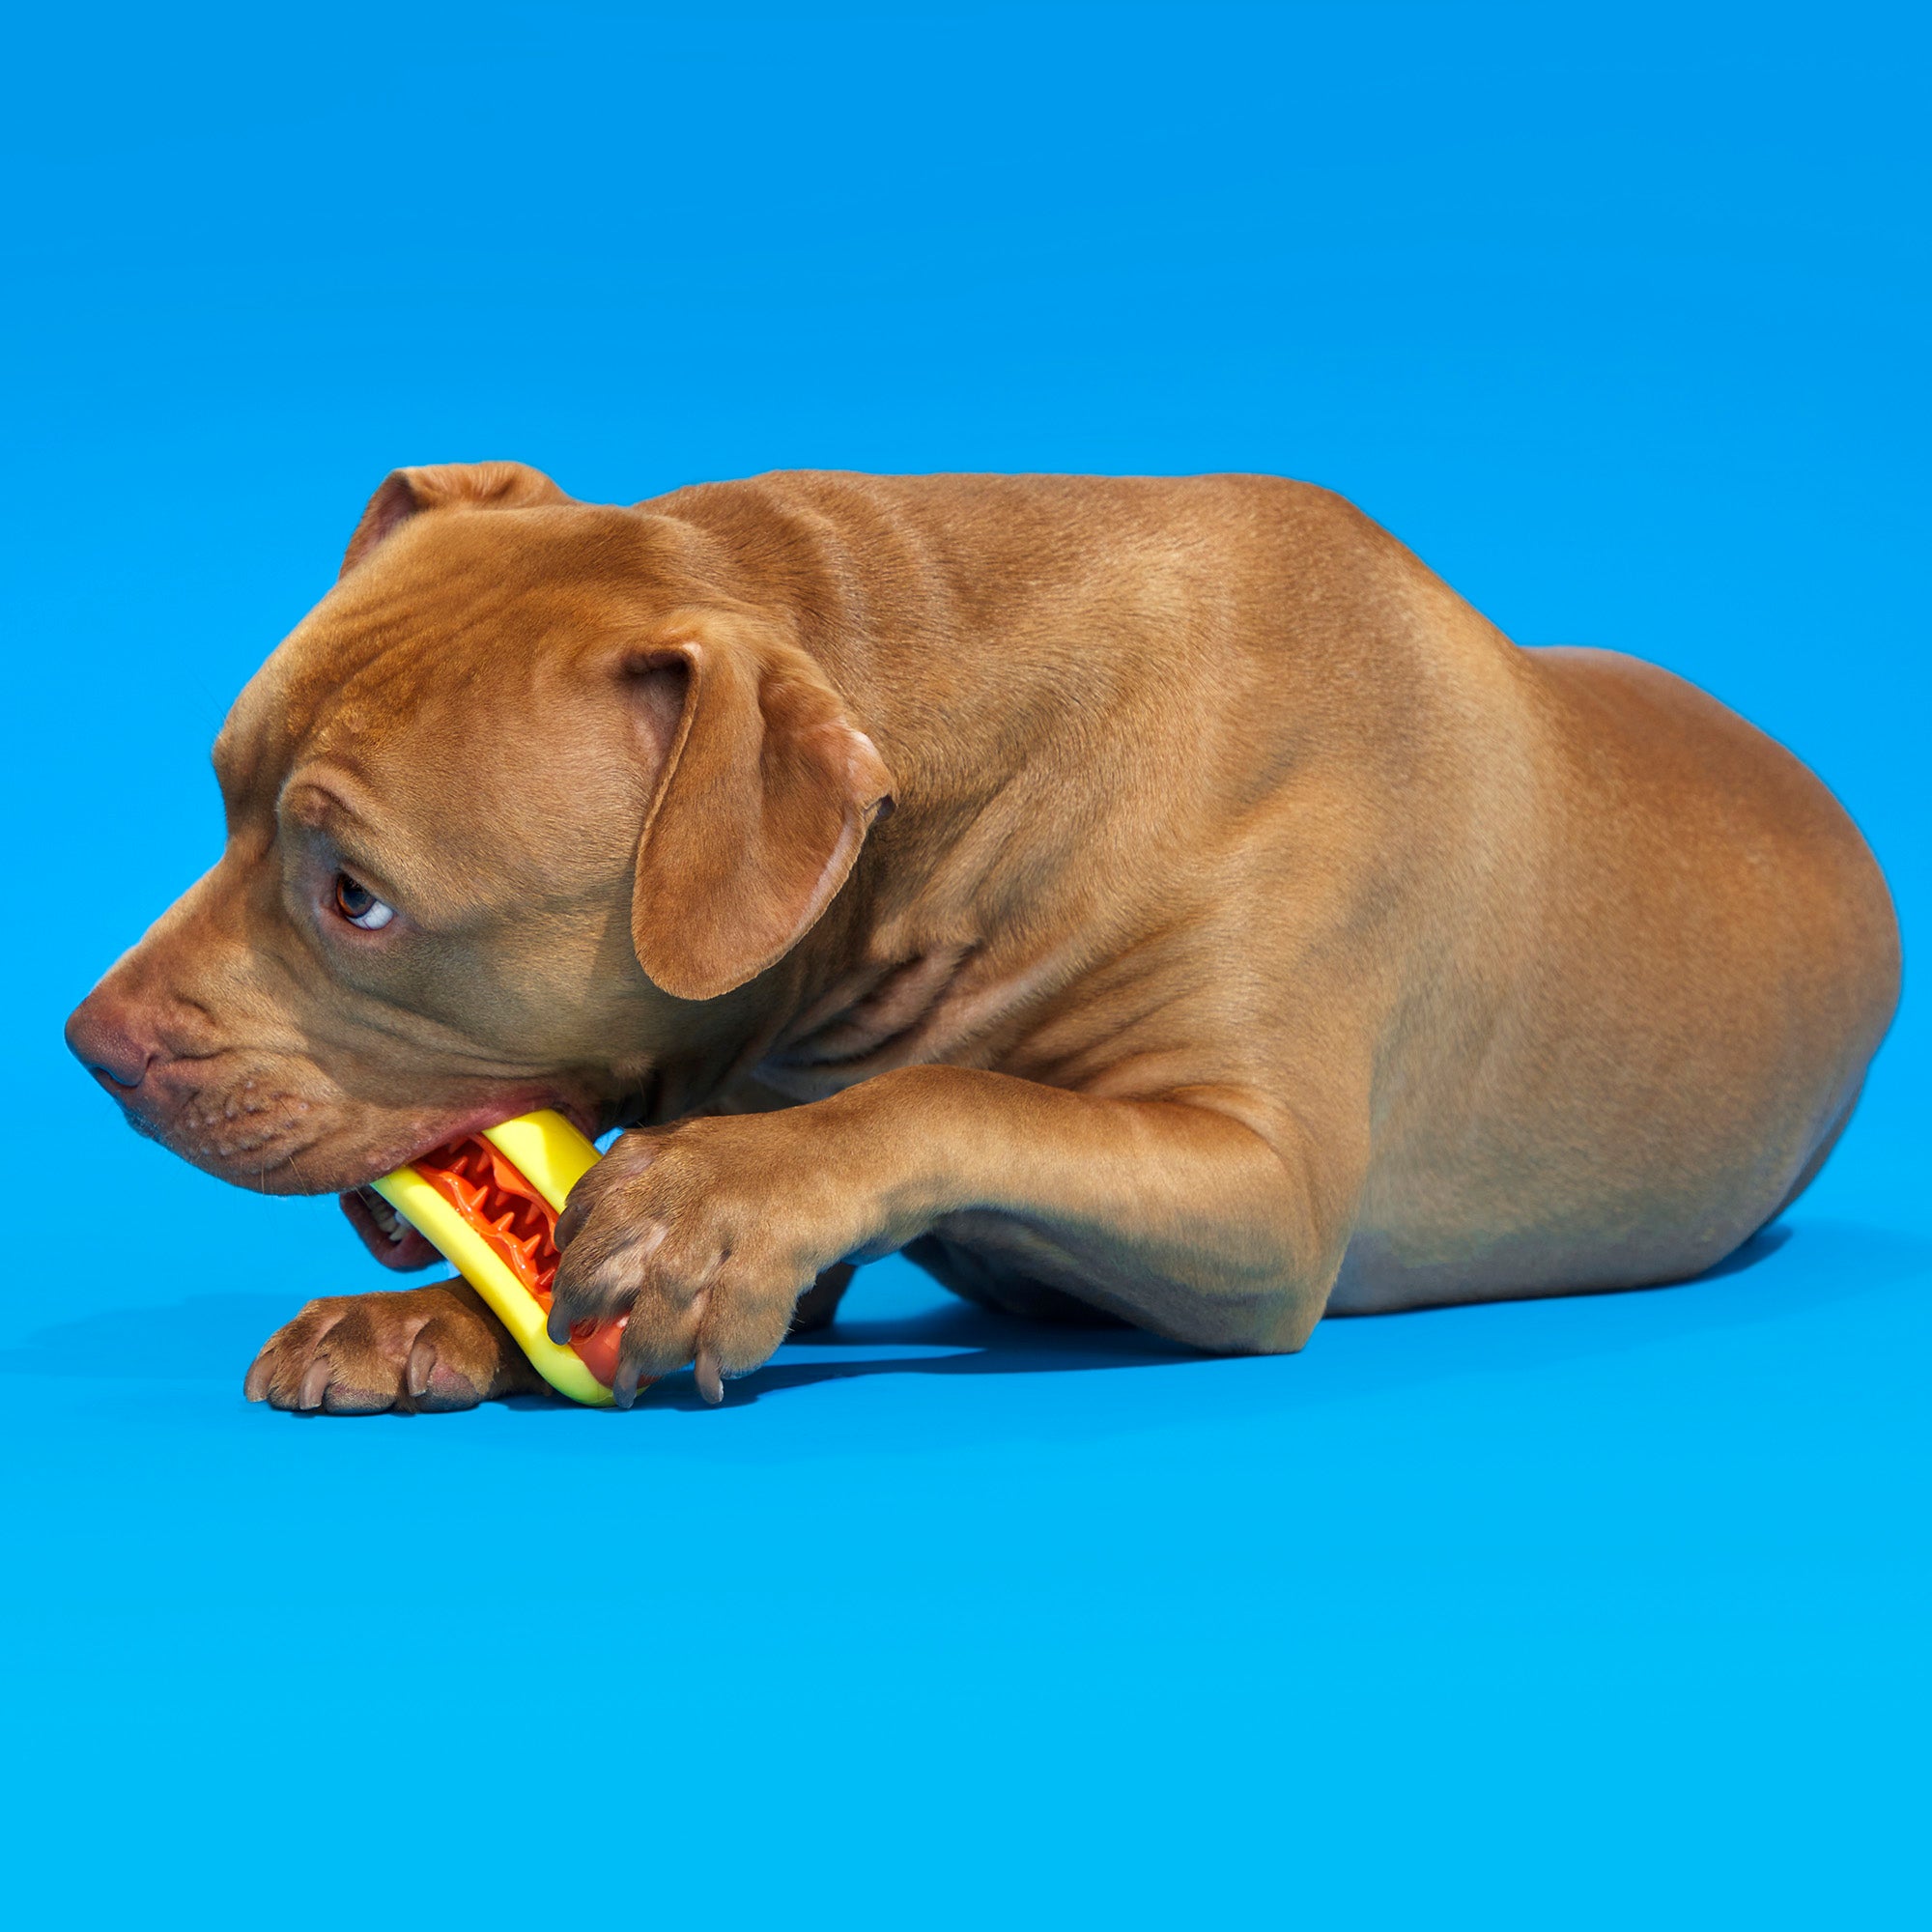 BARK Titan - Treat Dispensing Dog Toy